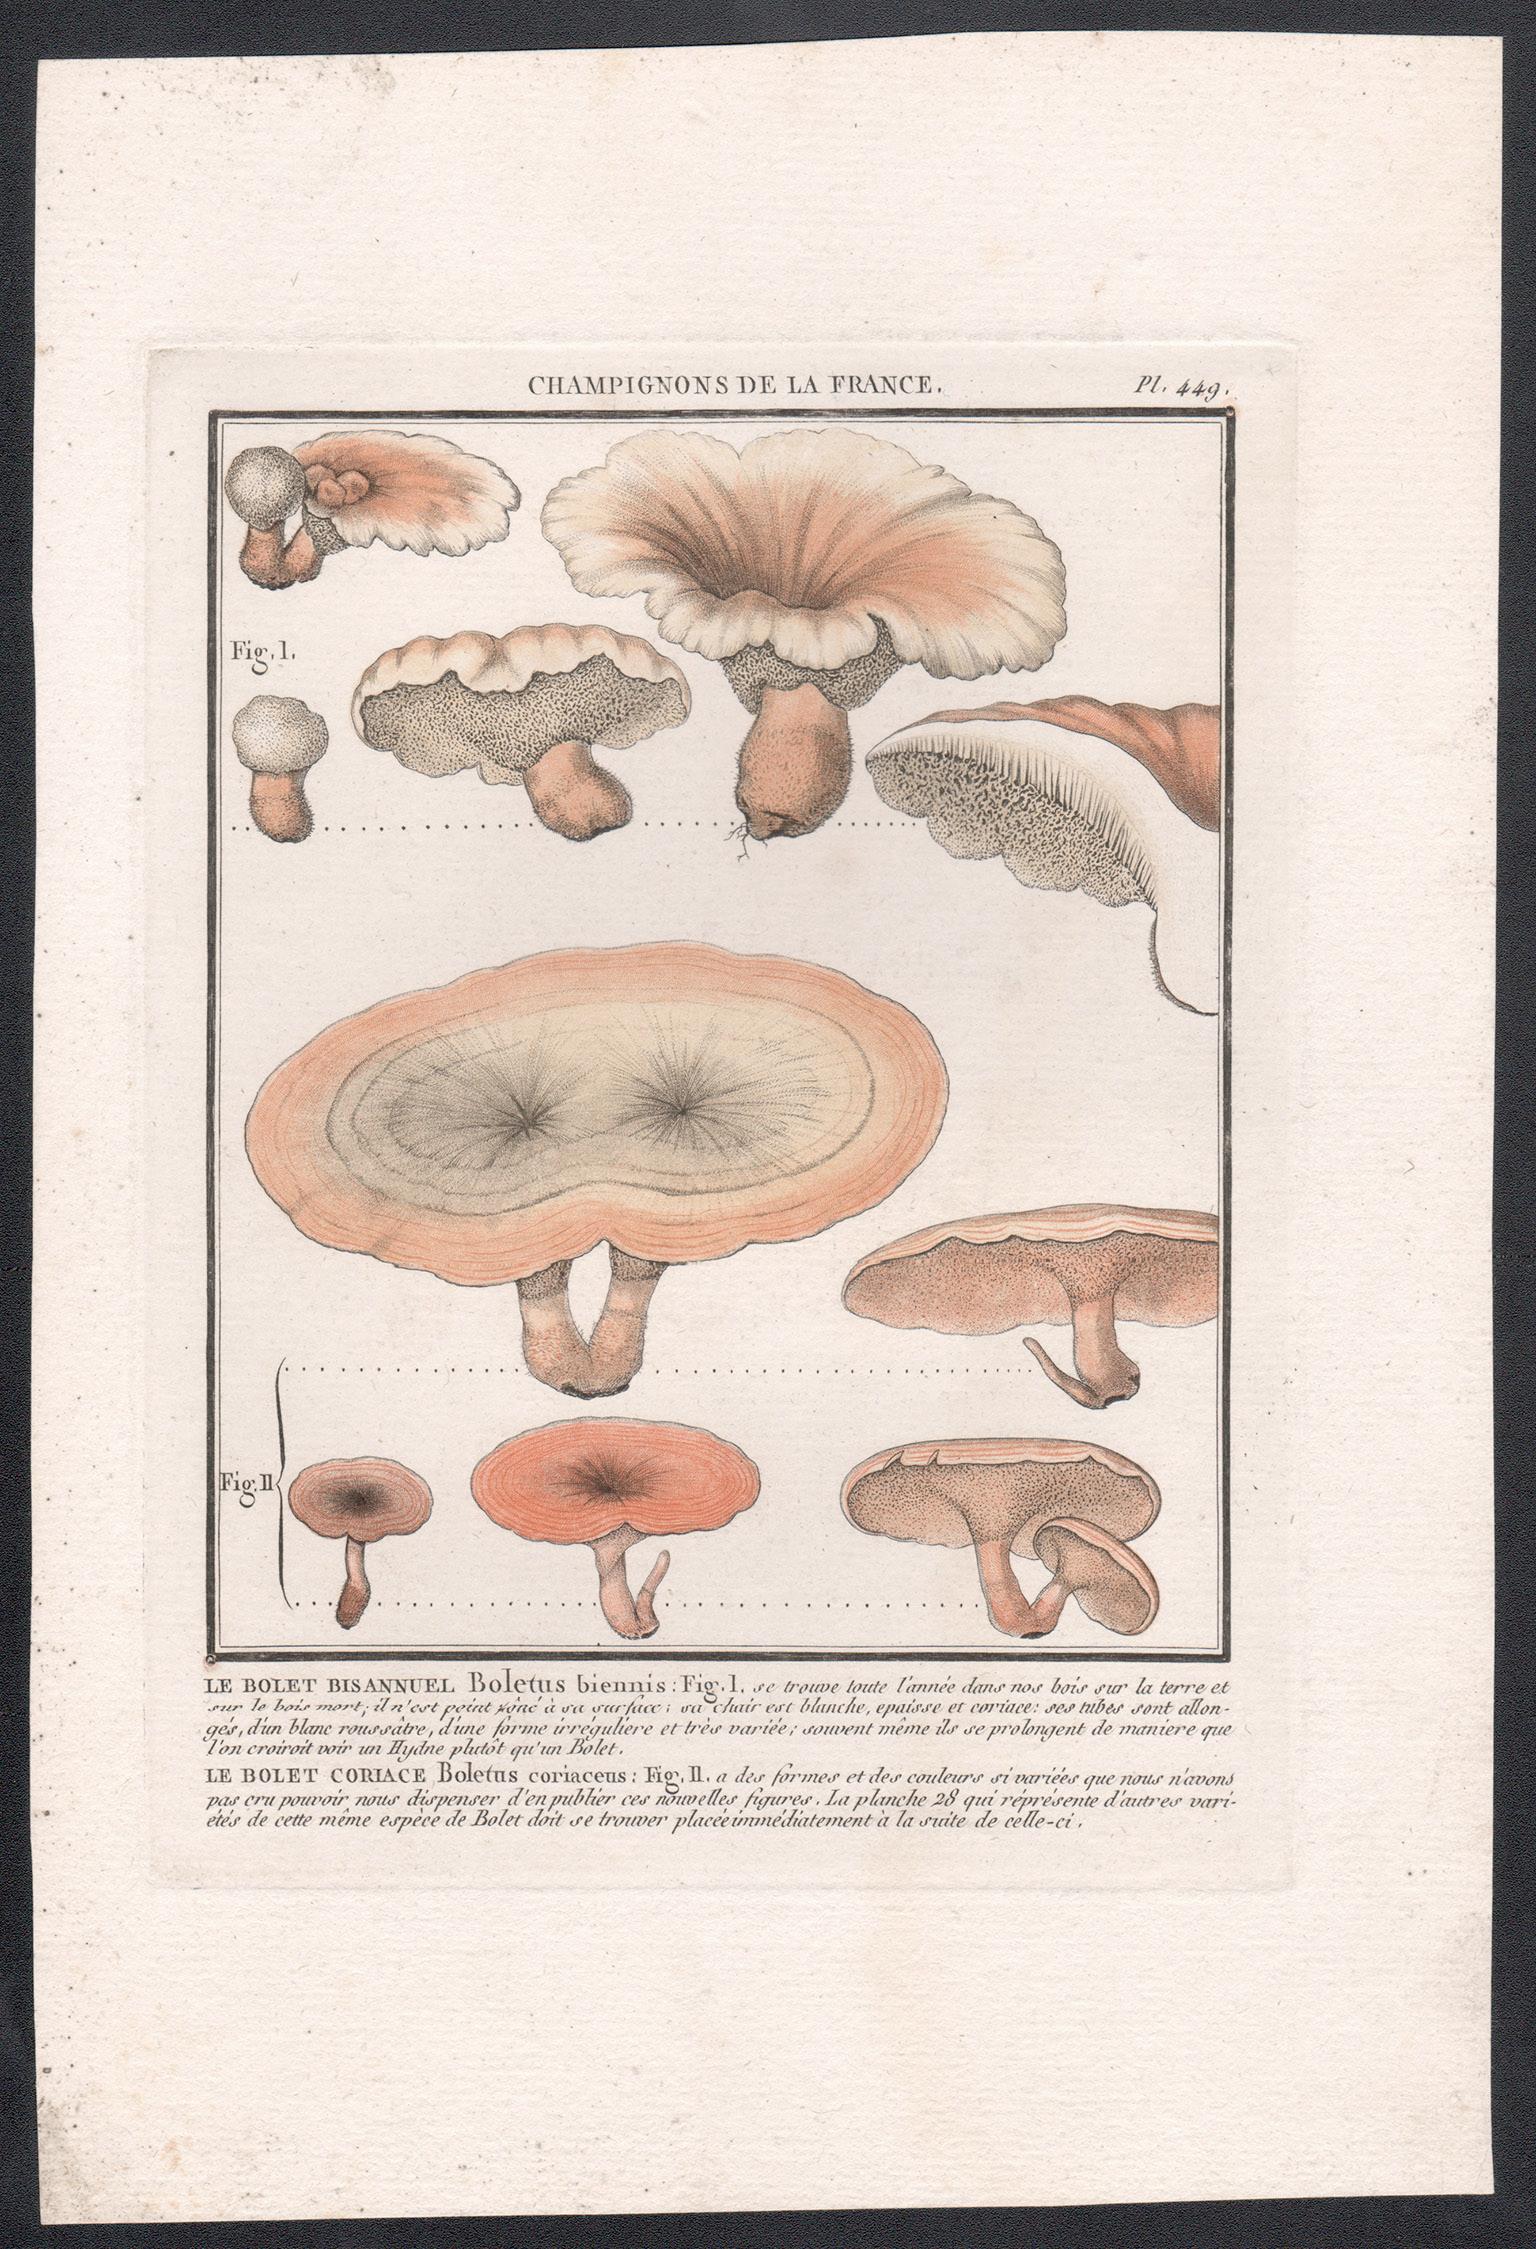 Champignon de la France, a French antique mushroom engraving, 1791 - Print by Jean Baptiste Francois Buillard